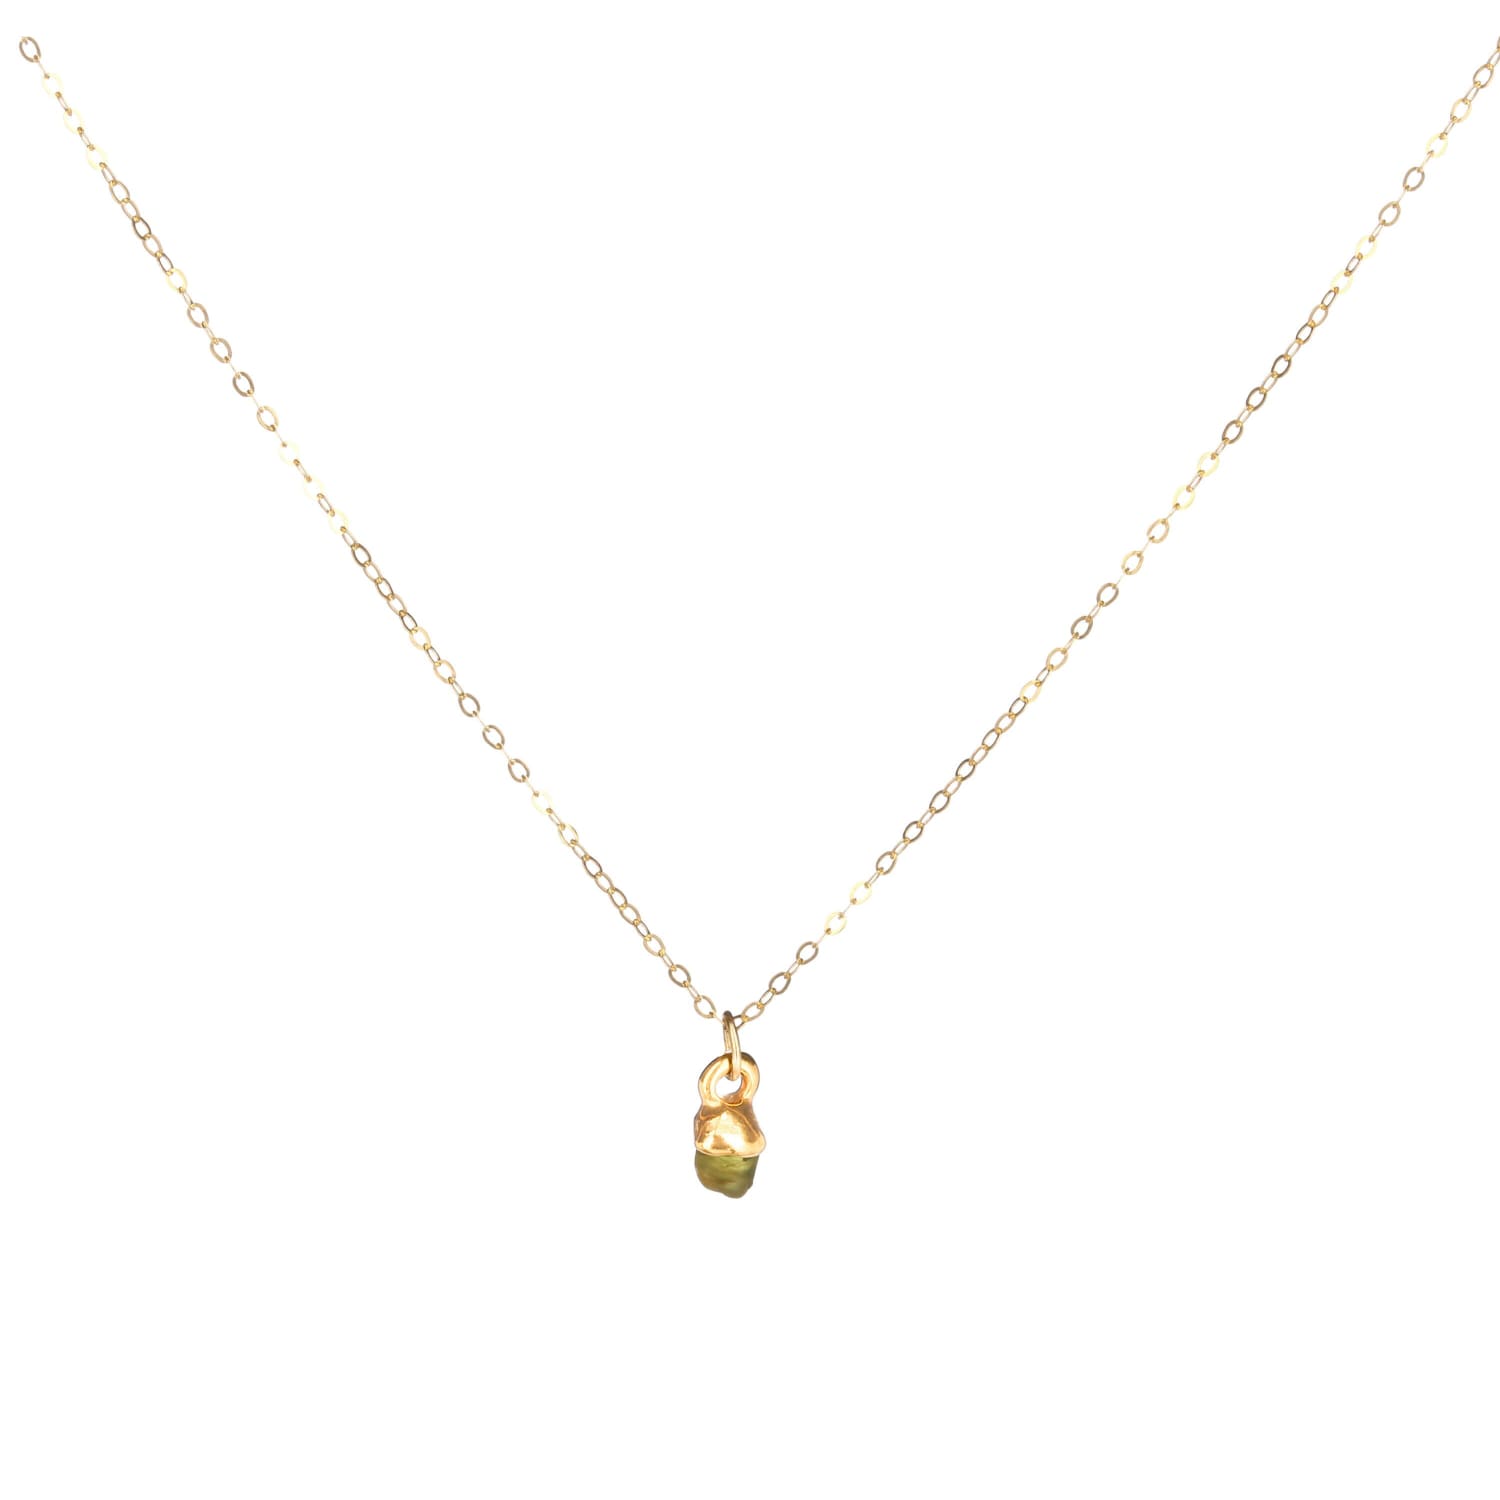 Raw Peridot Necklace Birthstone Leo Delicate Gemstone • 24k